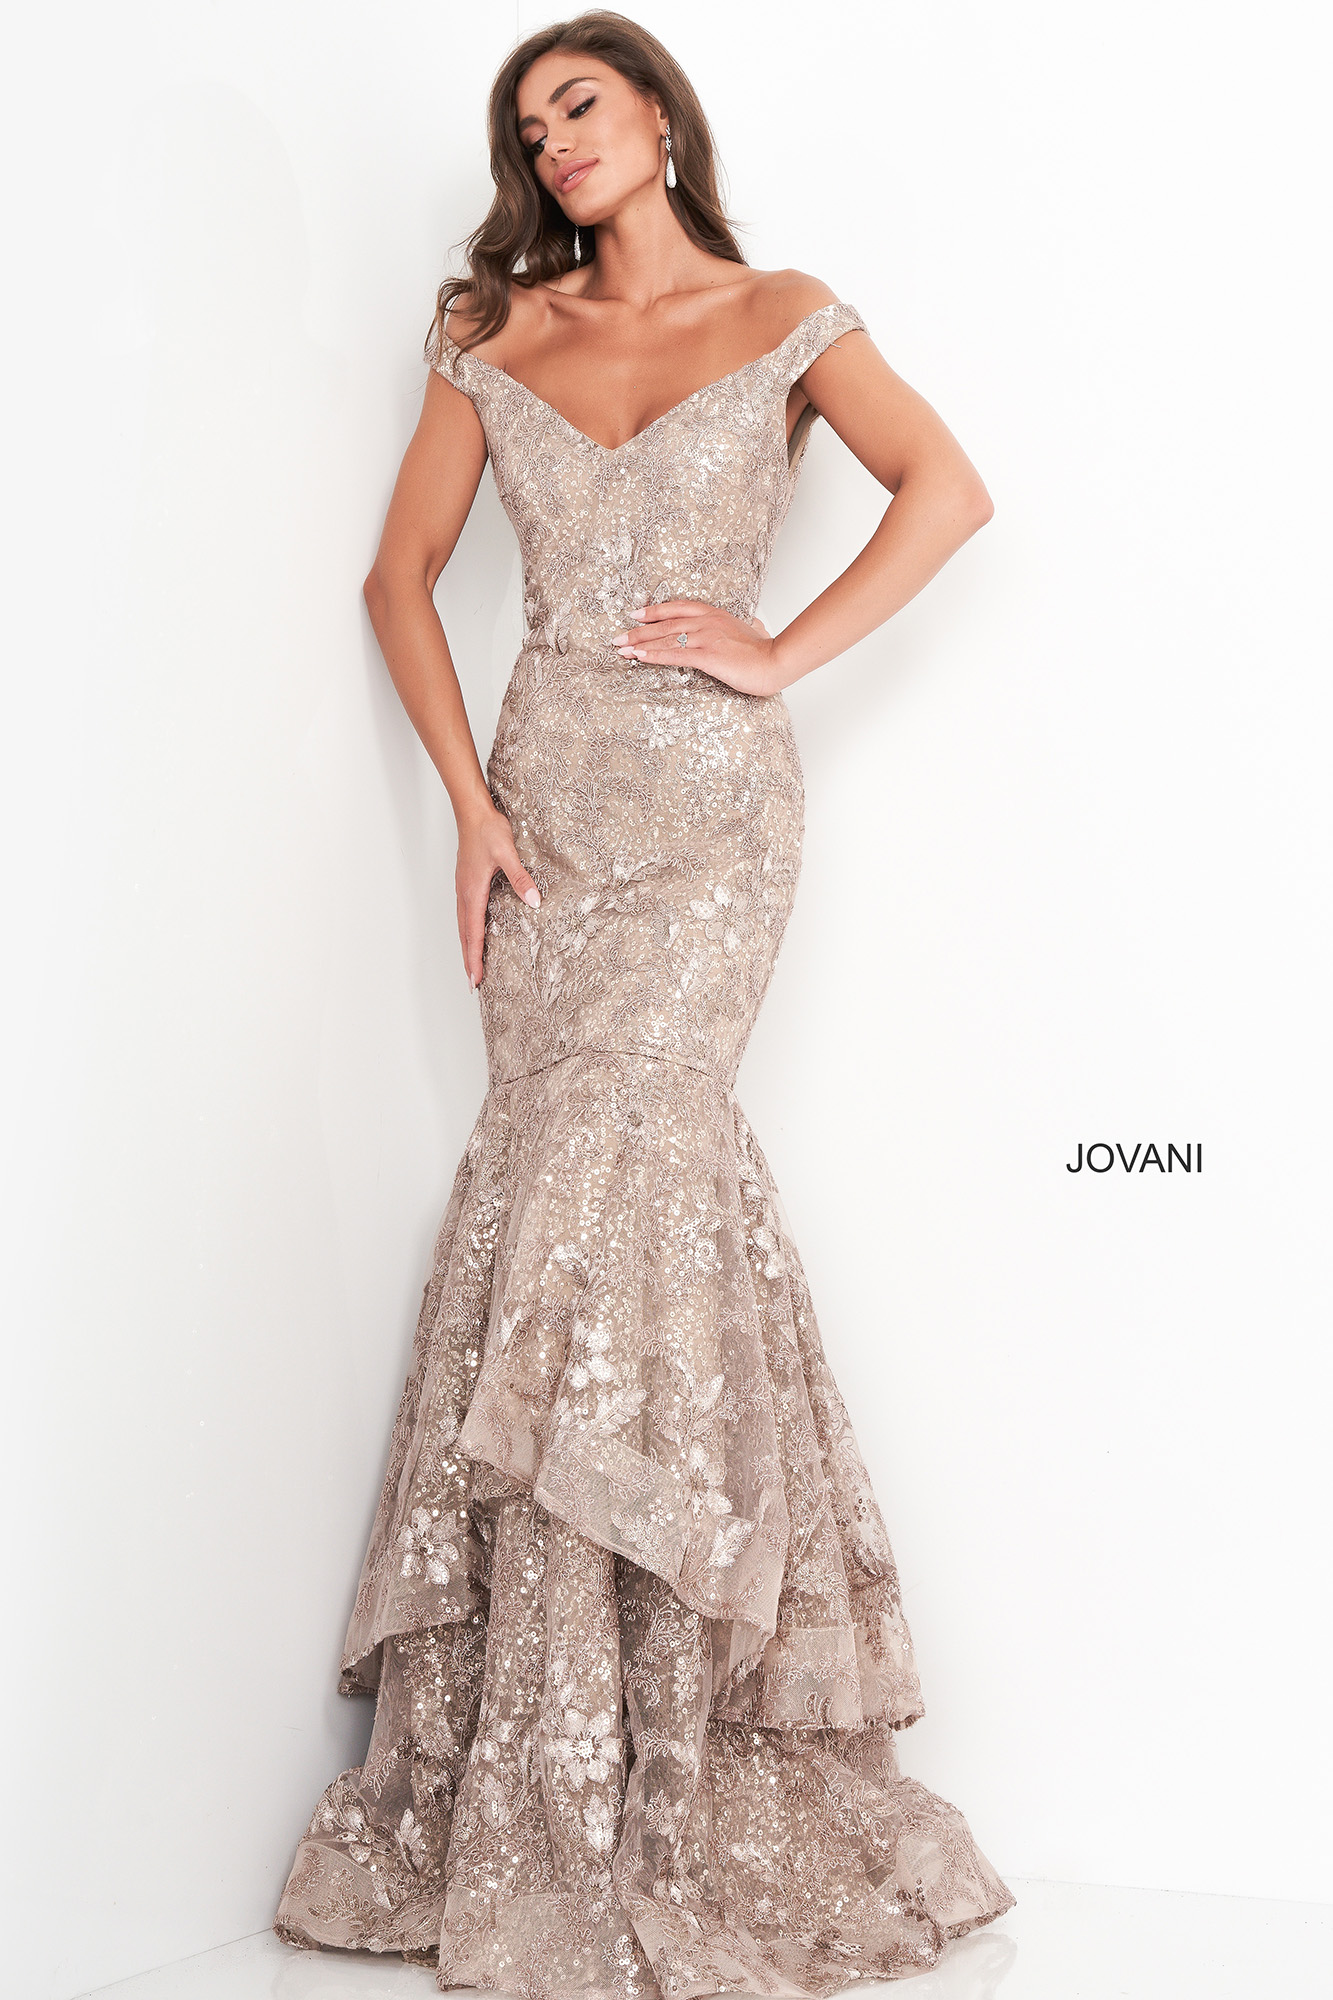 30 Most Breathtaking Mother of the Bride Dresses - Jovani Blog